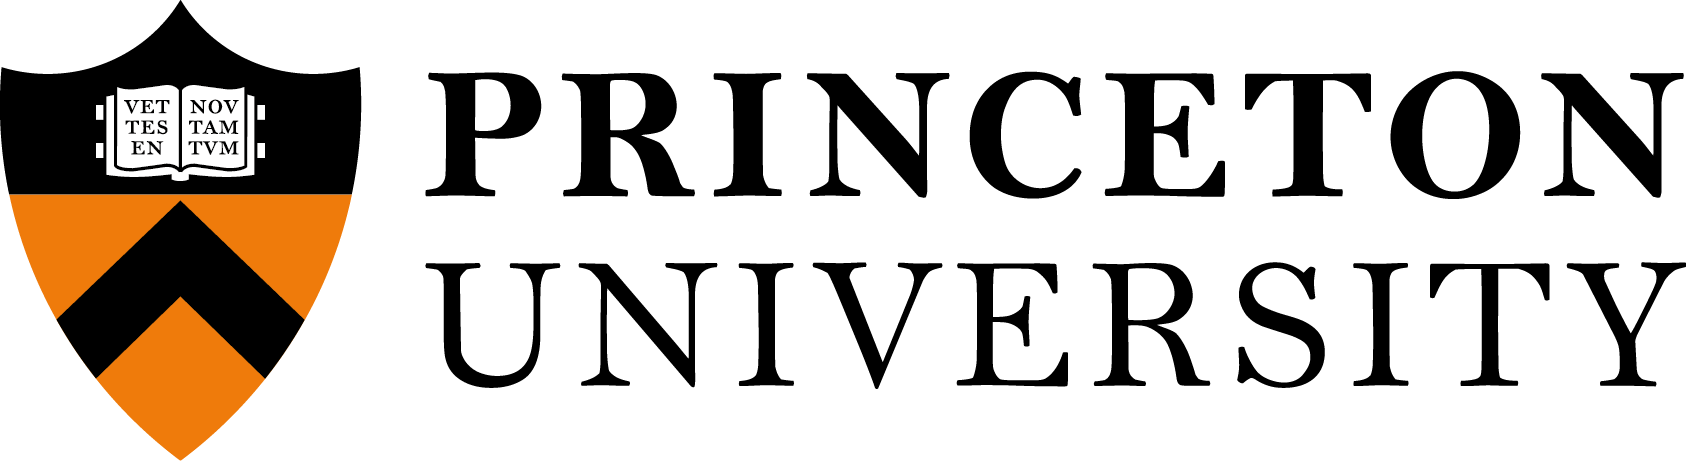 Princeton University Logo [princeton.edu] Download Vector